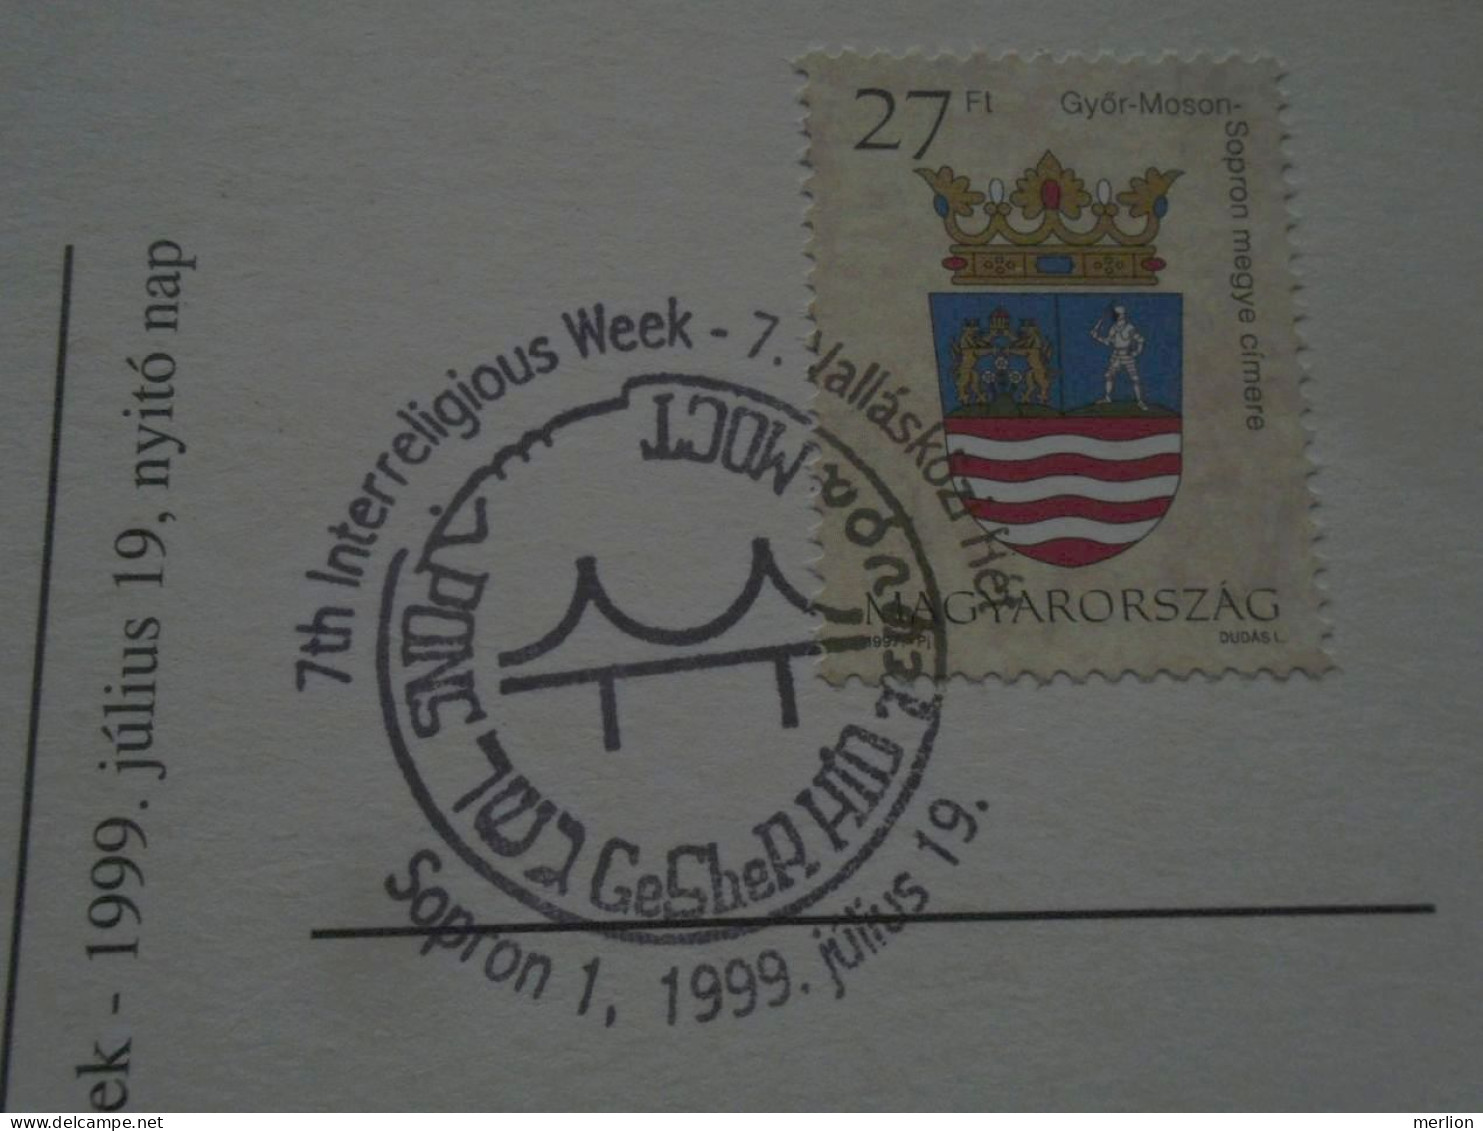 D201009  Hungary  Sopron  - Special Postmark - Interfaith Week Sopron - Jewish Day 1999 Gesher Híd - Joodse Geloof